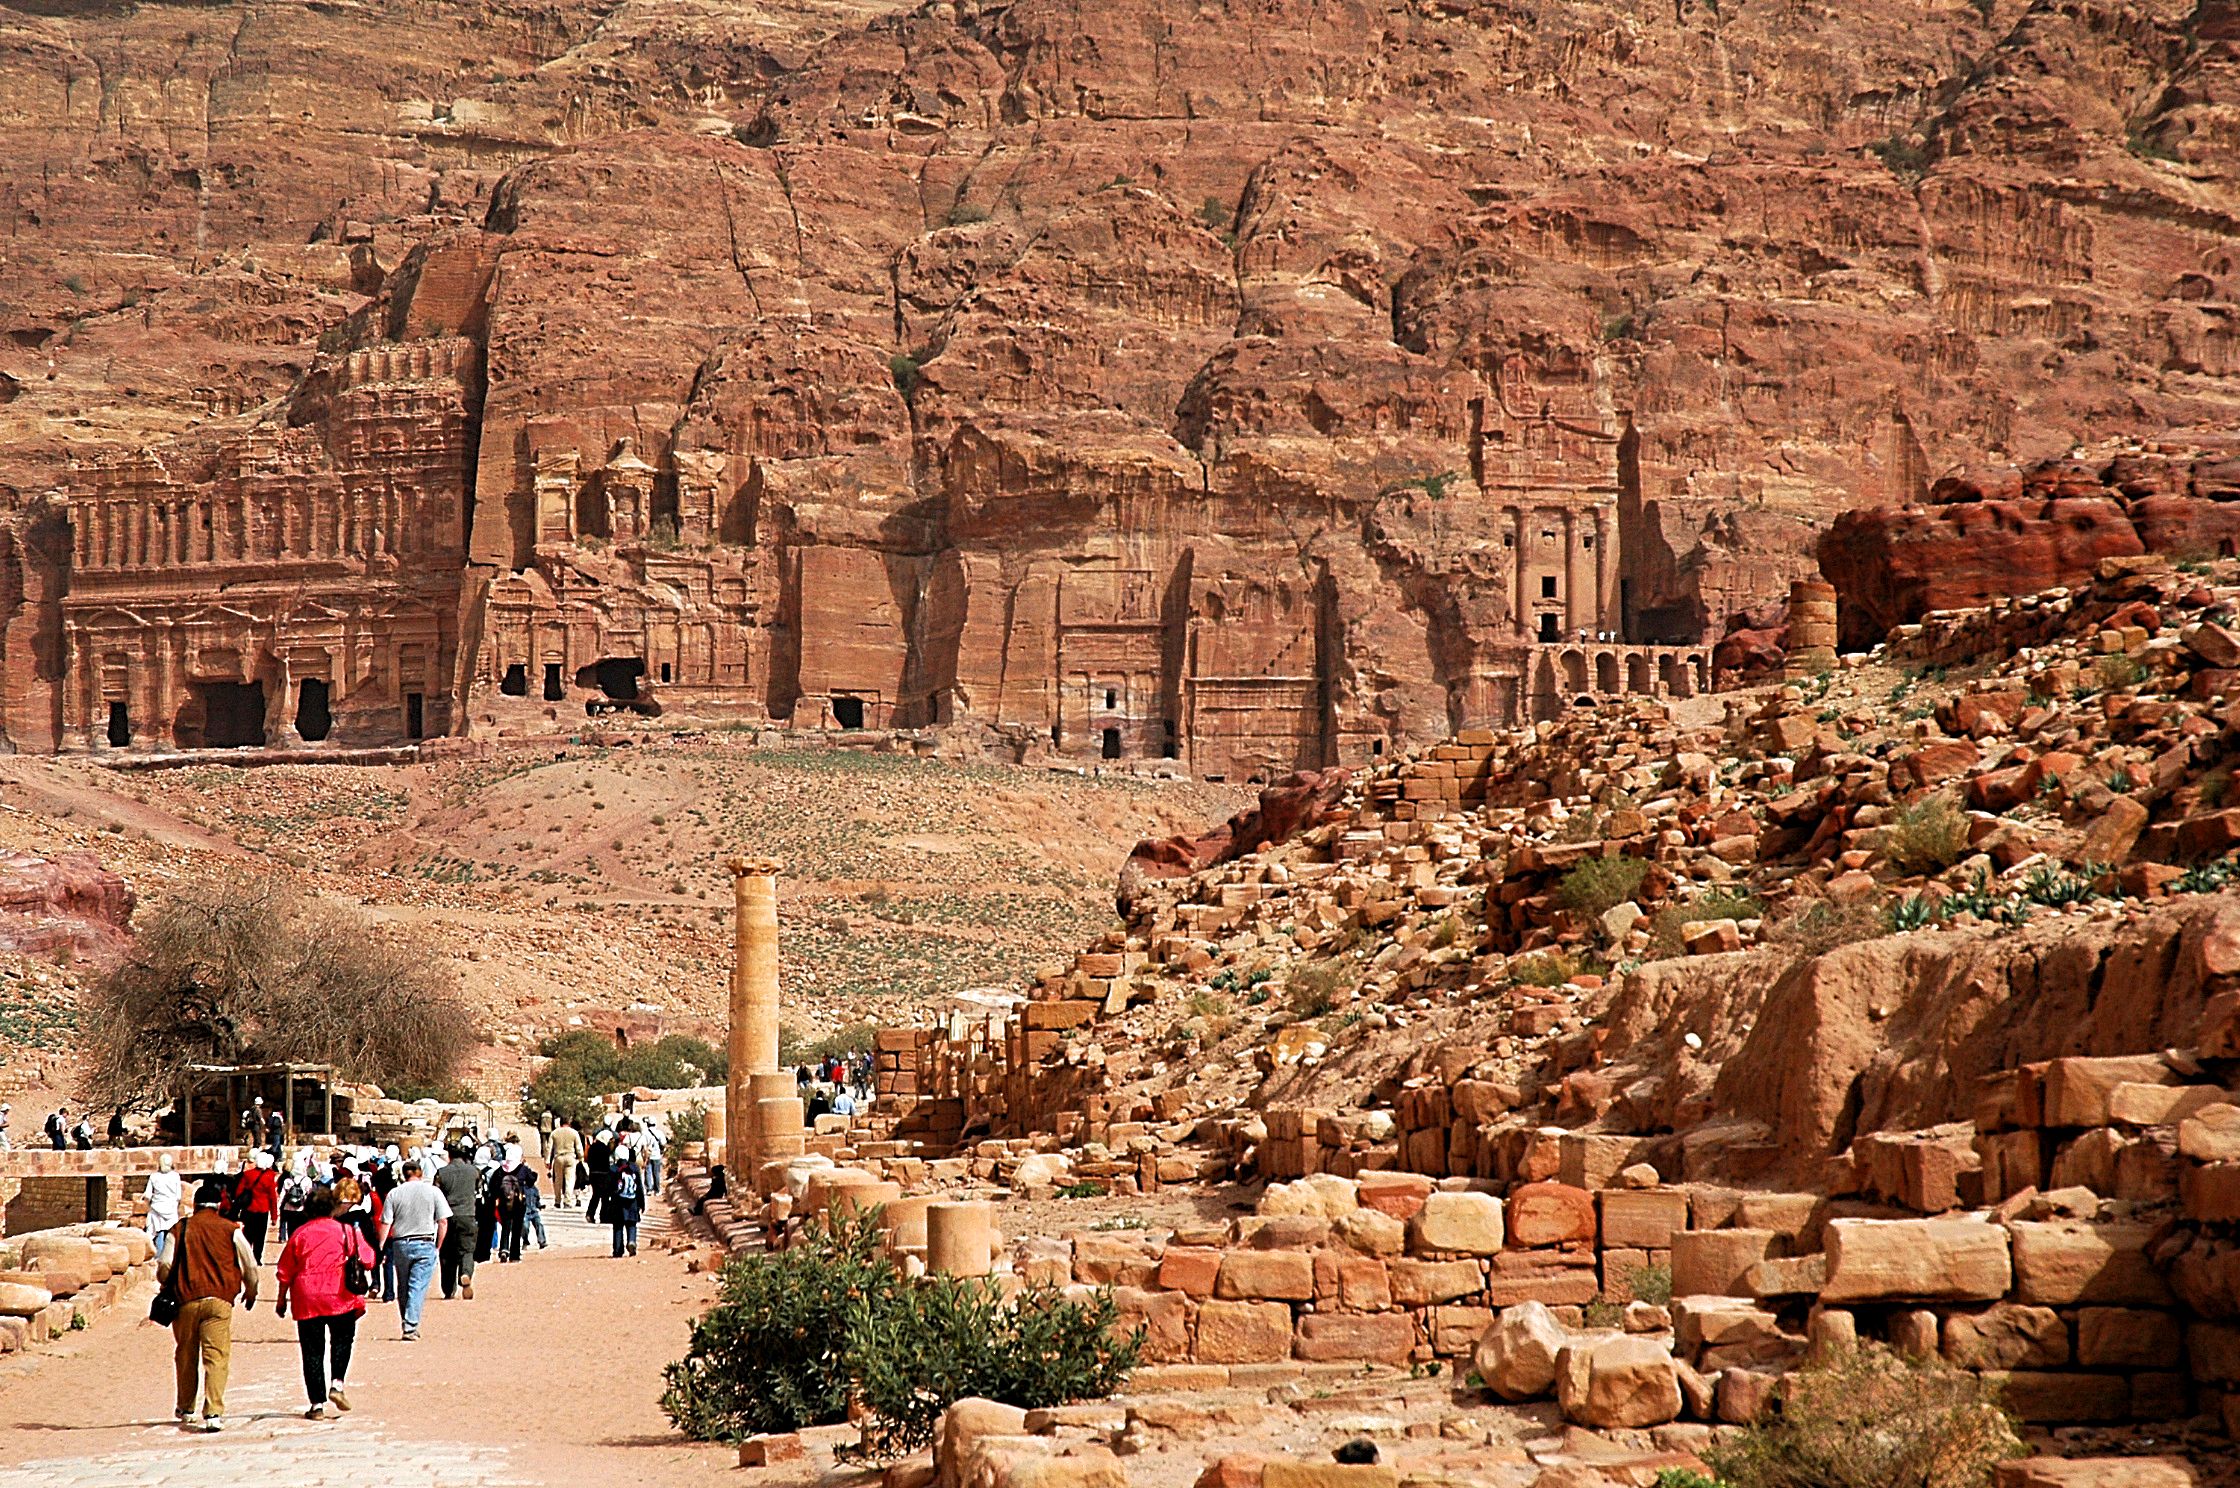 Tourists on a day tour in Petra, Jordan